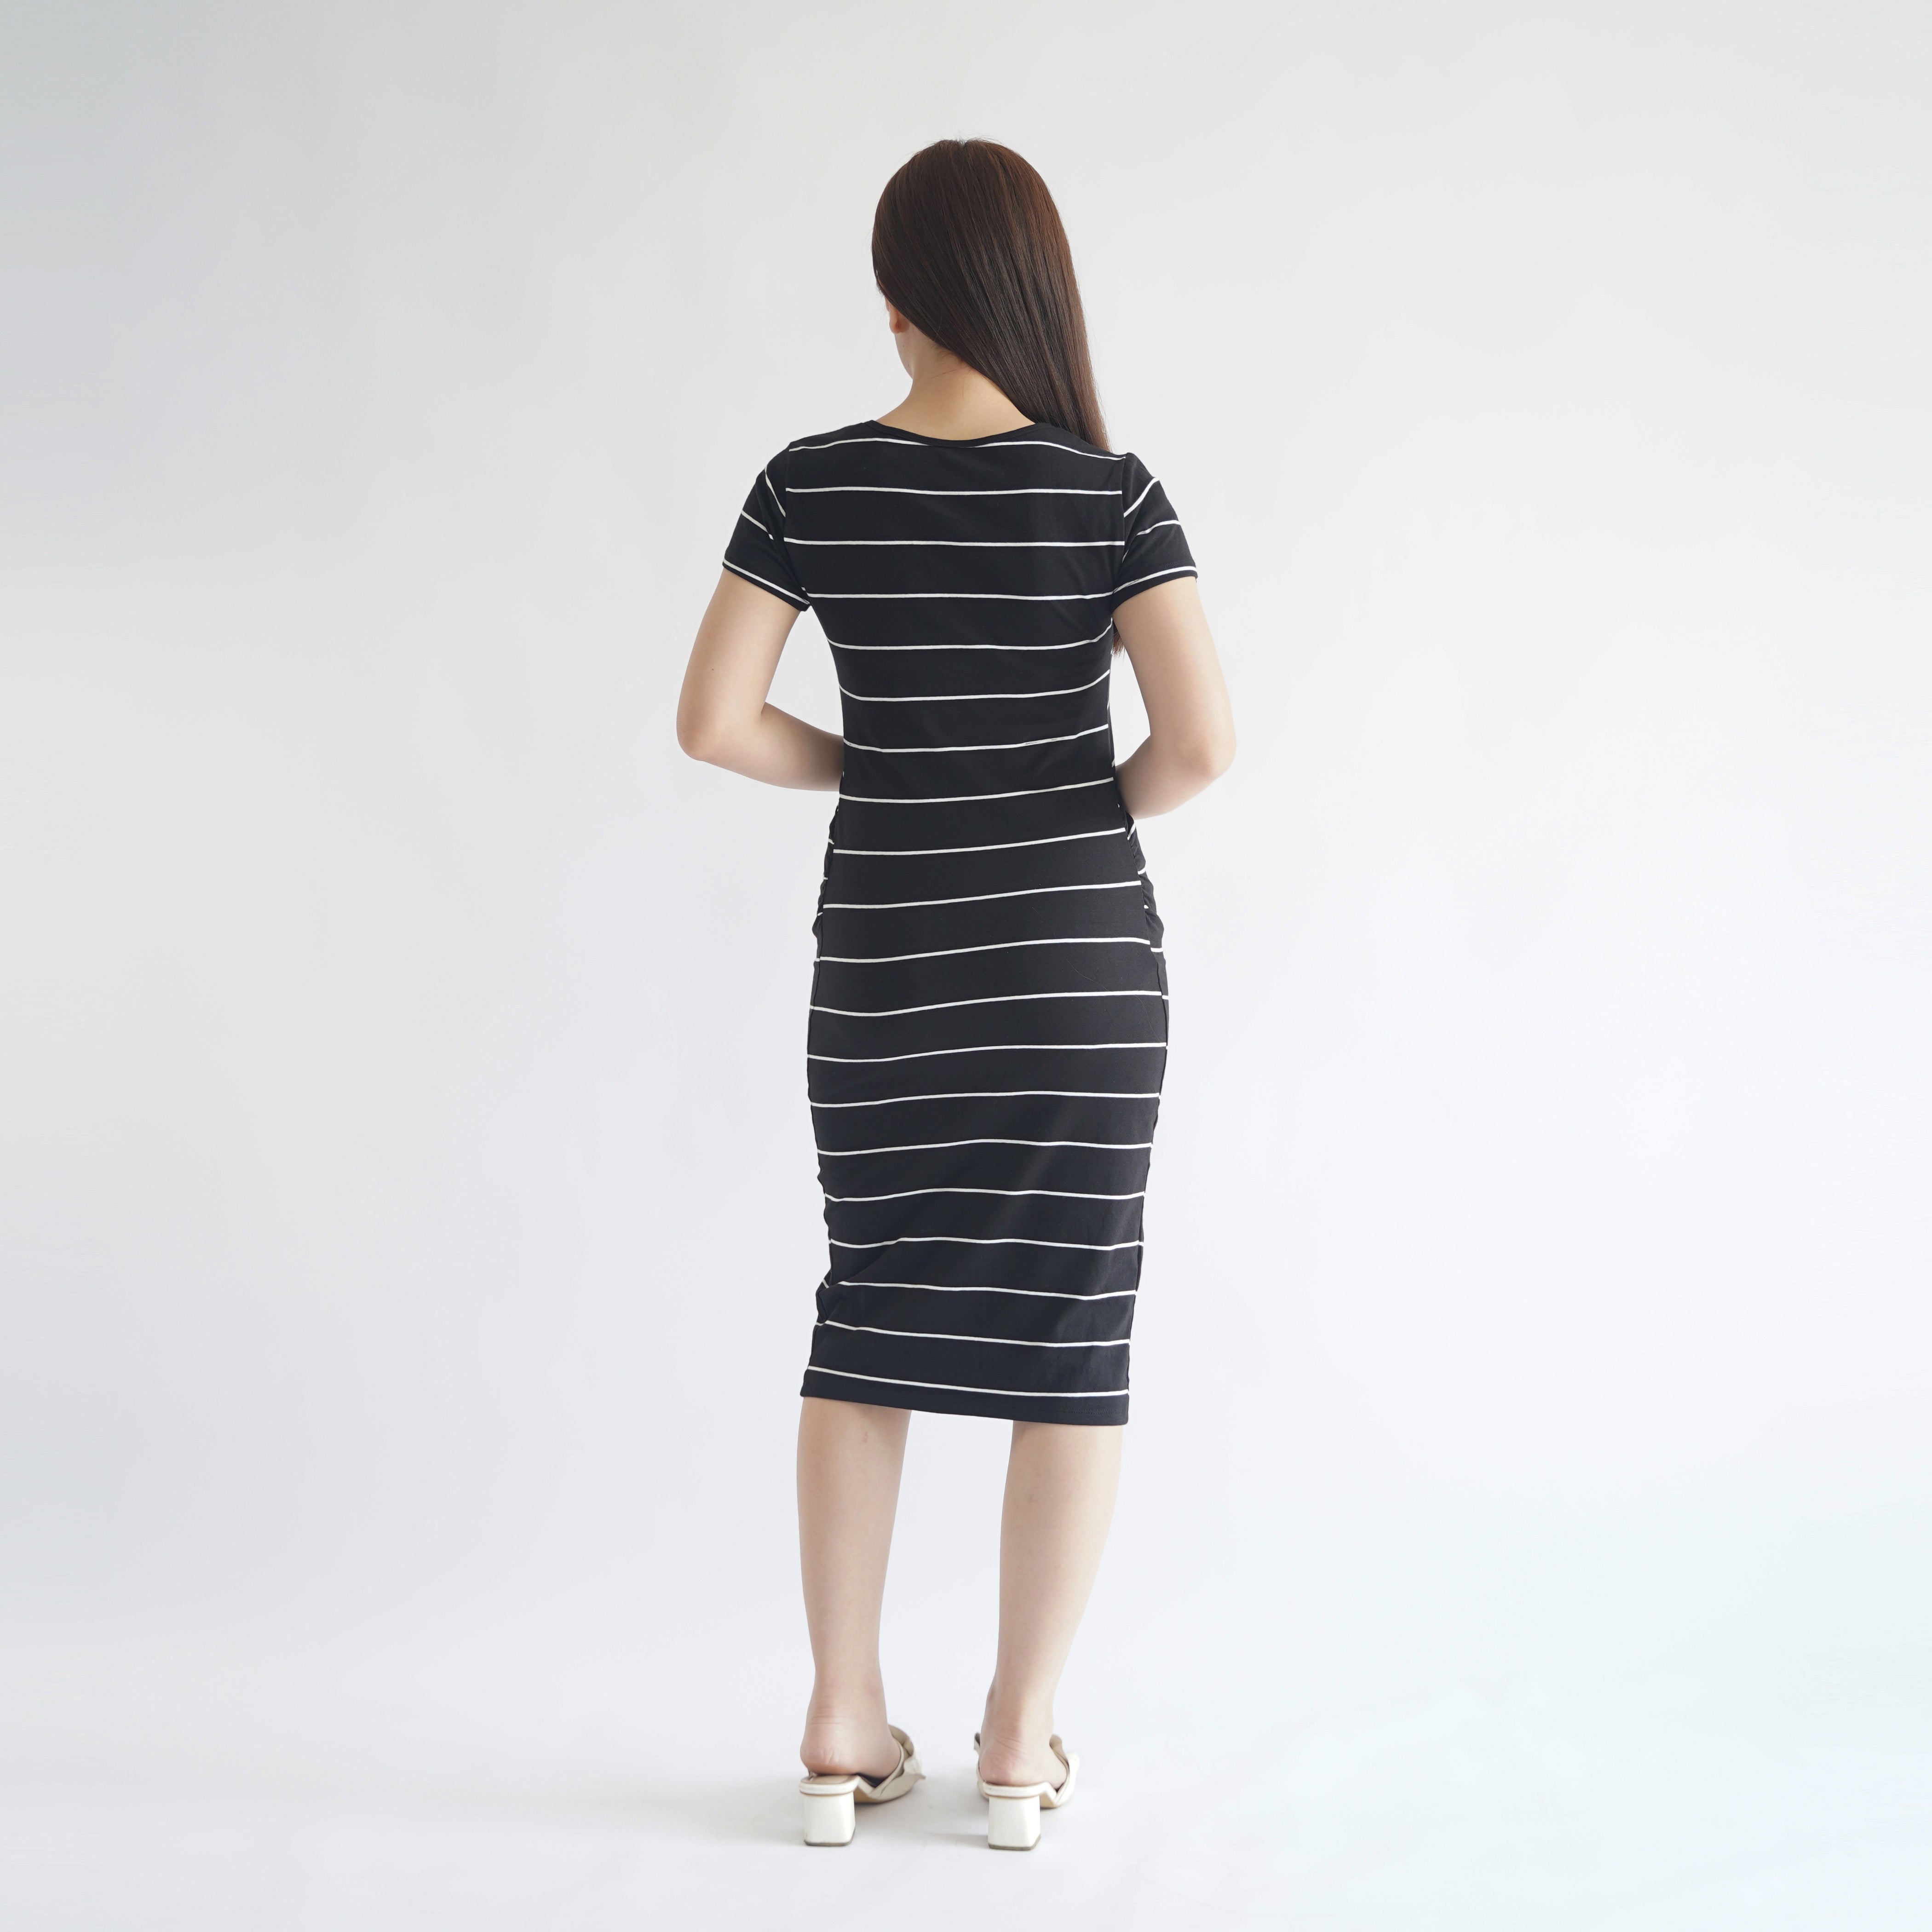 Dress Wanita Hamil Lengan Pendek tersedia 3 Warna (CG-TMDW 02)